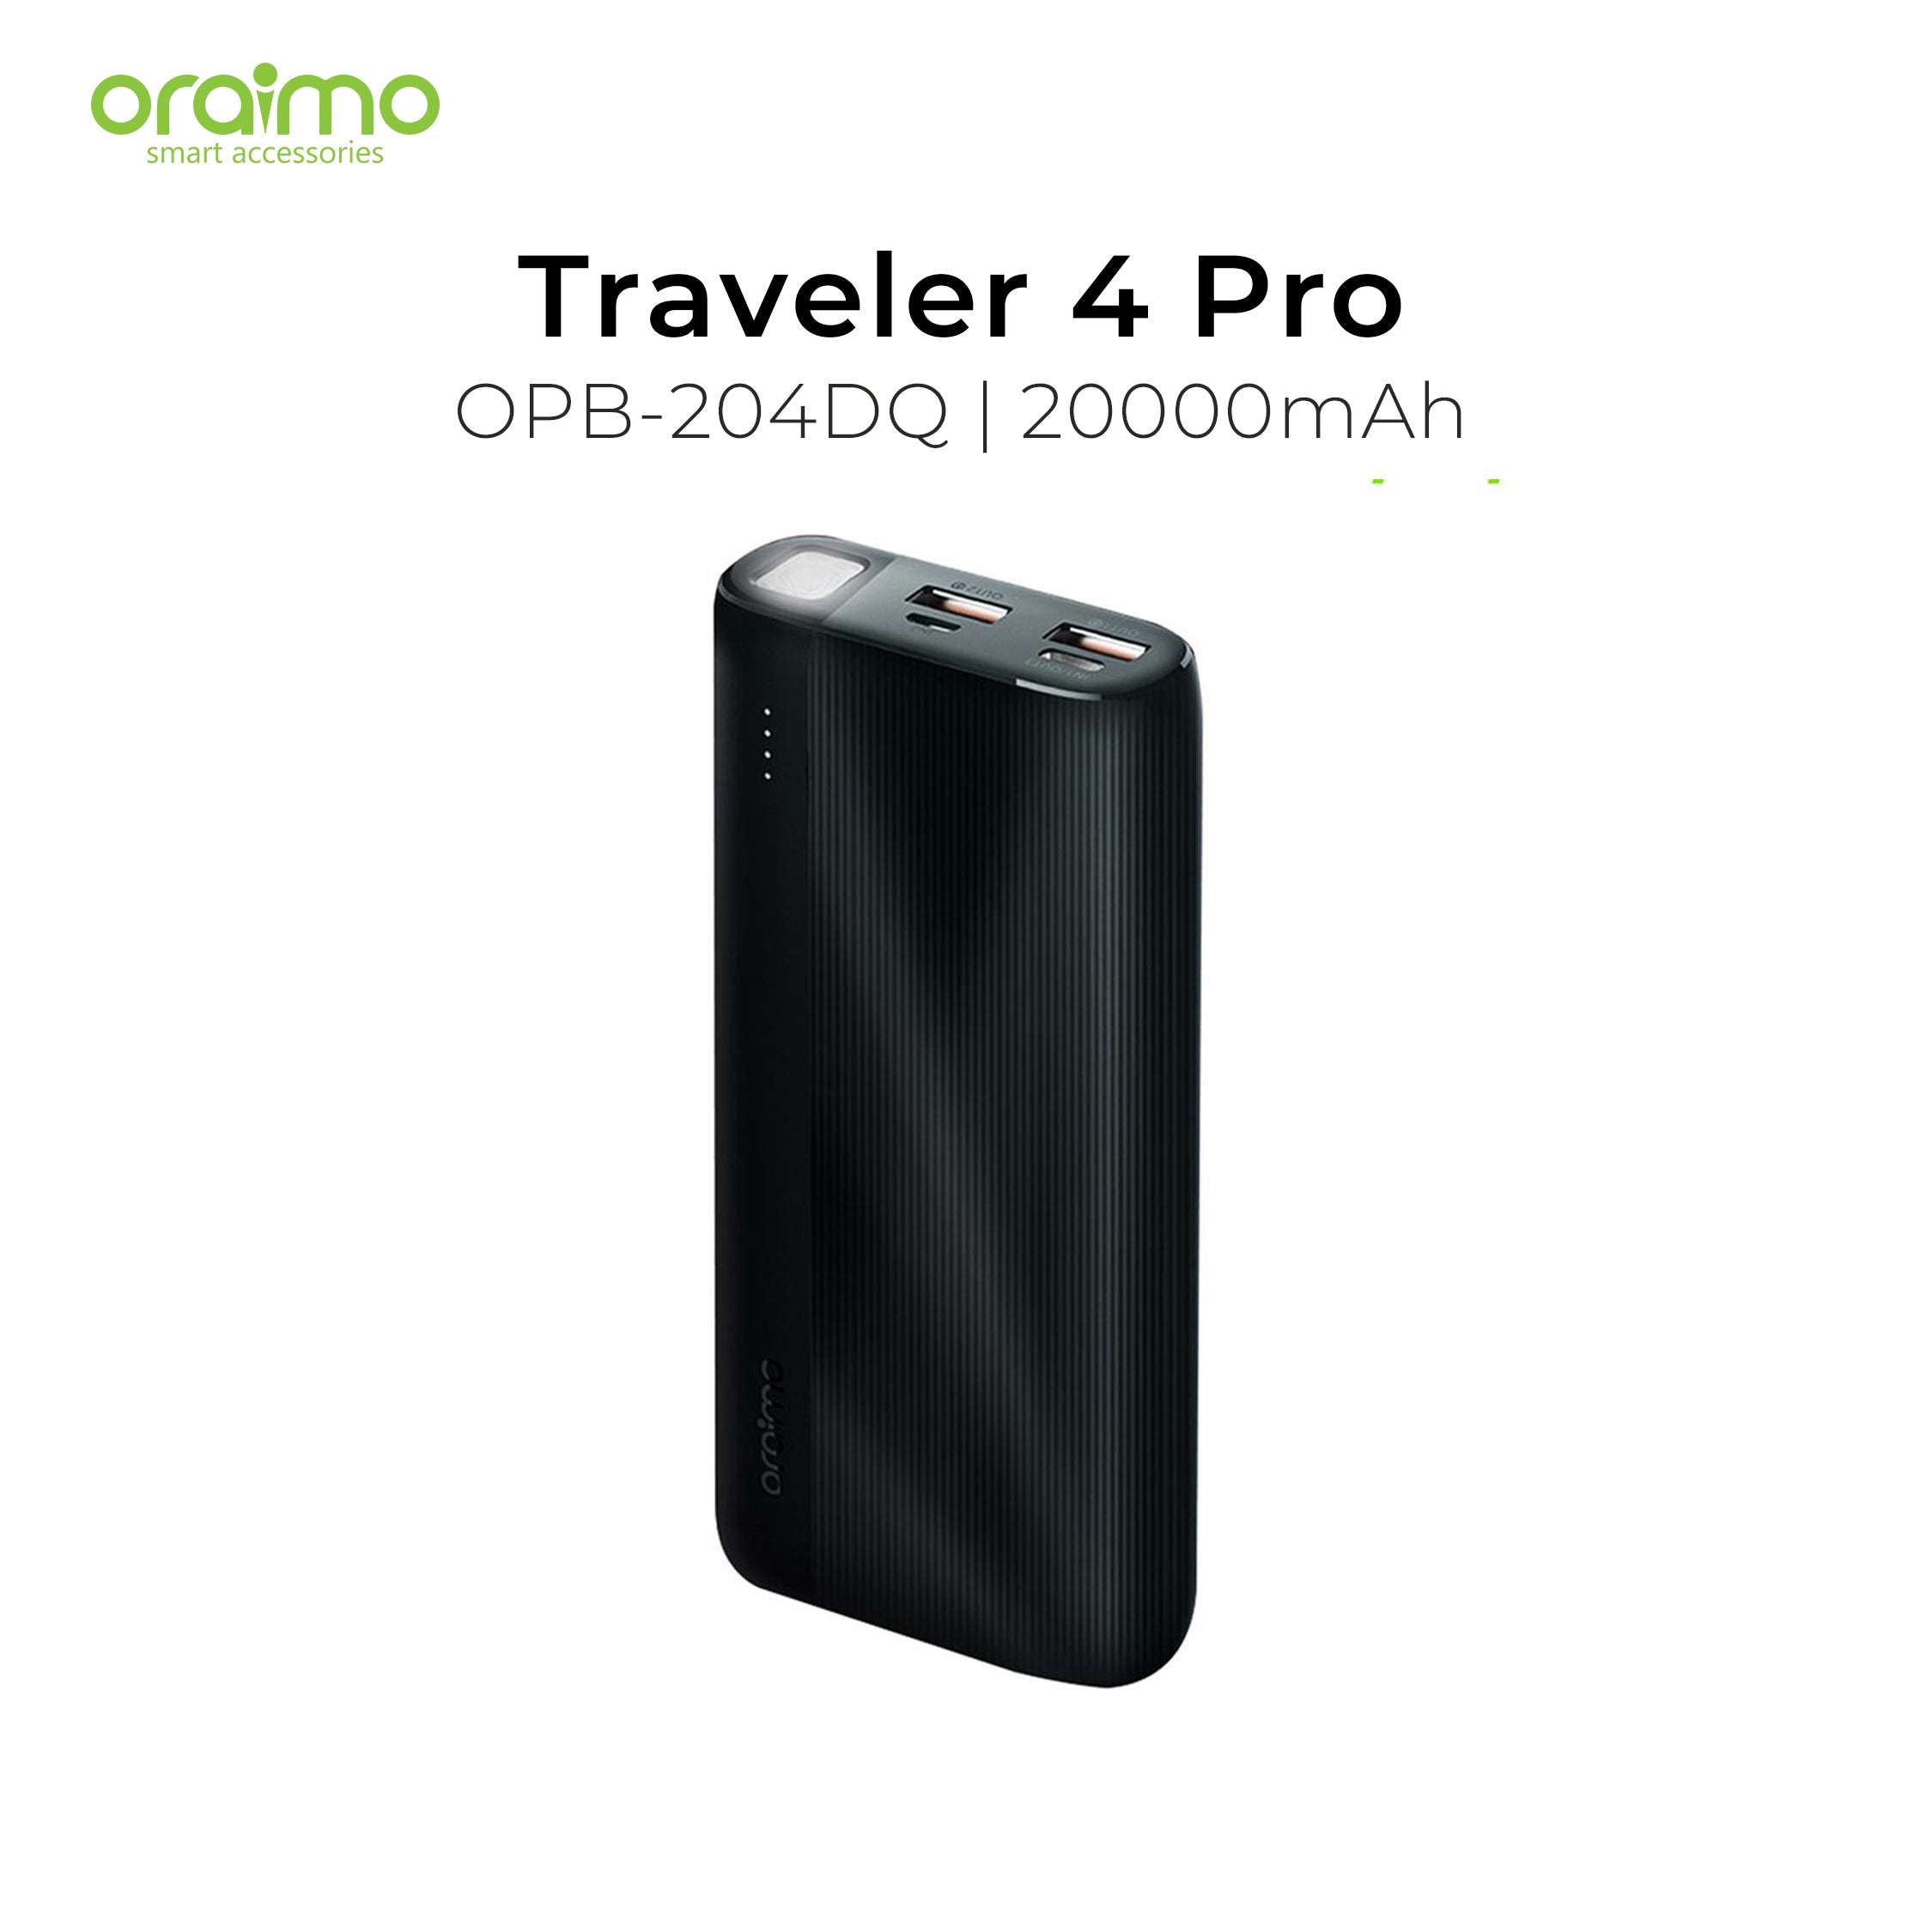 Oraimo Traveler 4 Pro Power Bank OPB-P204DQ